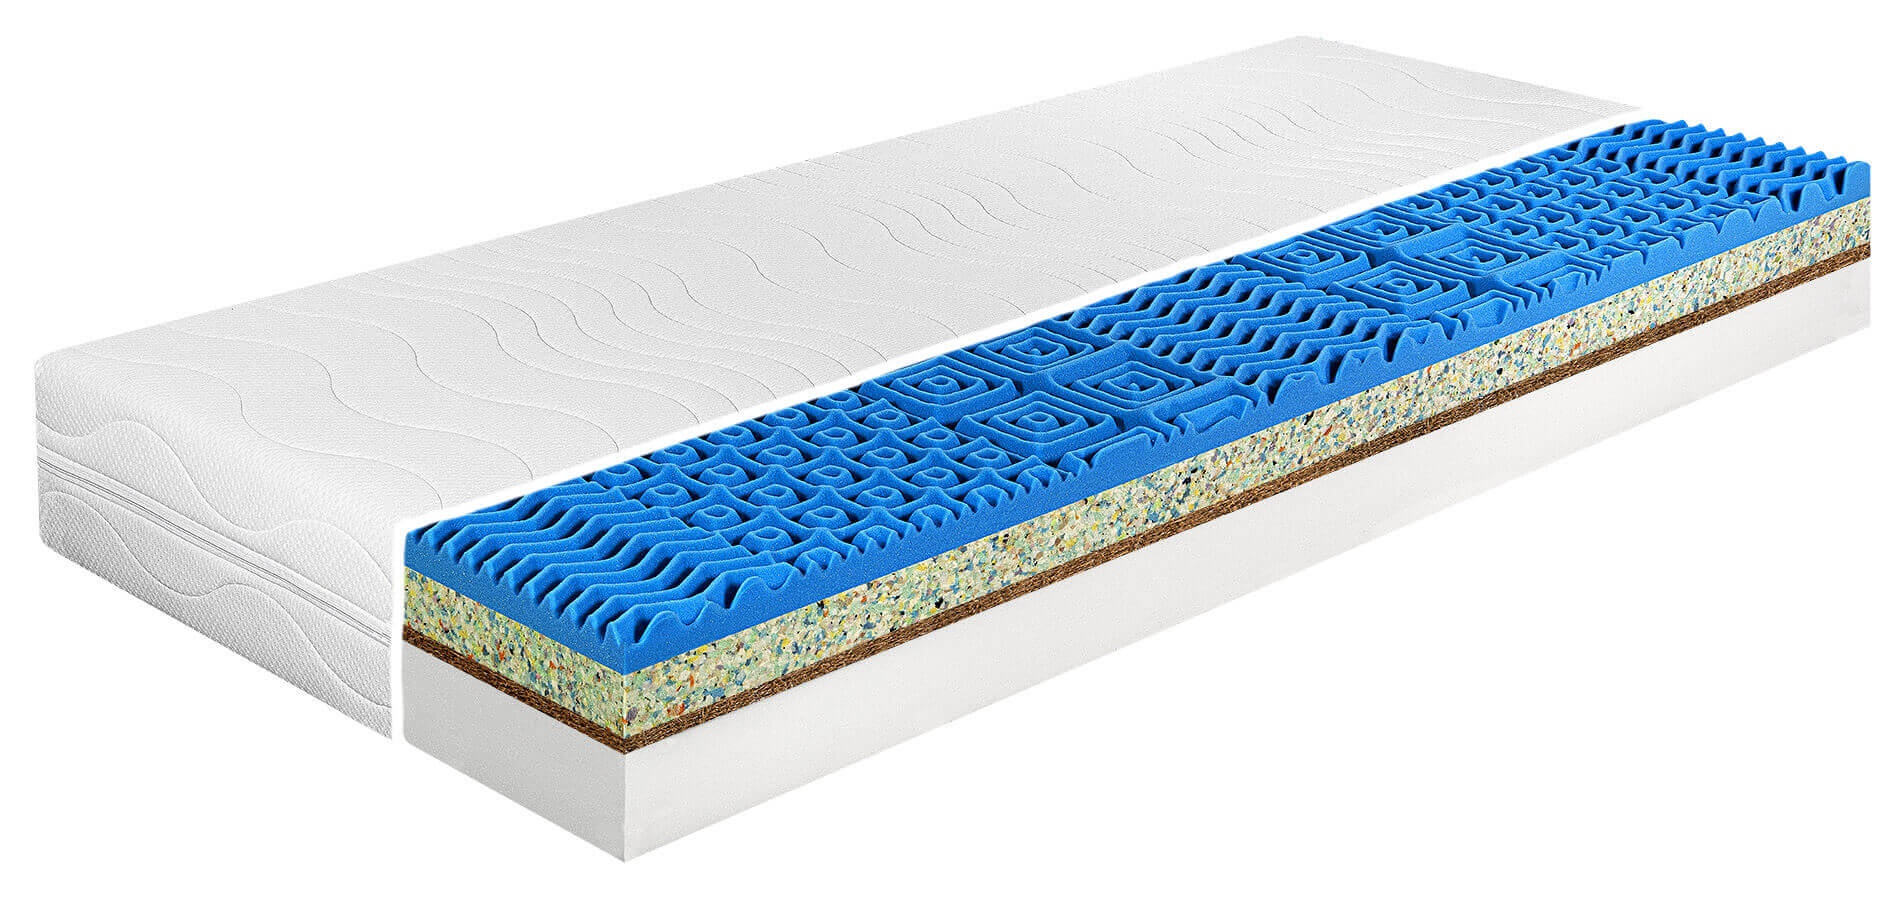 Sendvičová matrace ZEUS PLUS, výška 22 cm Rozměr: 160 x 200 cm, Materiál: chloe aktiv